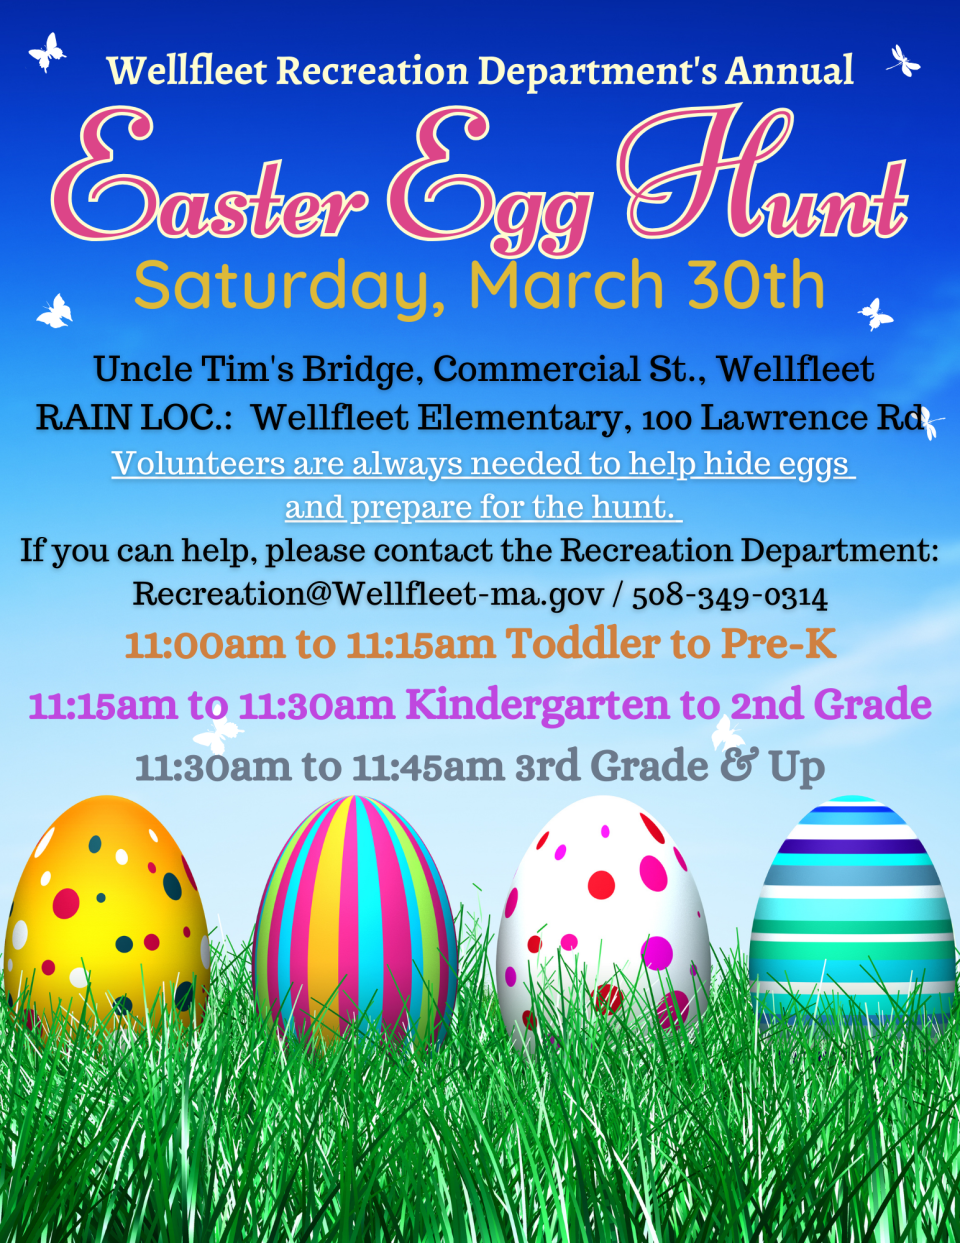 Poster for the Wellfleet Recreation Department's Easter Egg Hunts on March 30.